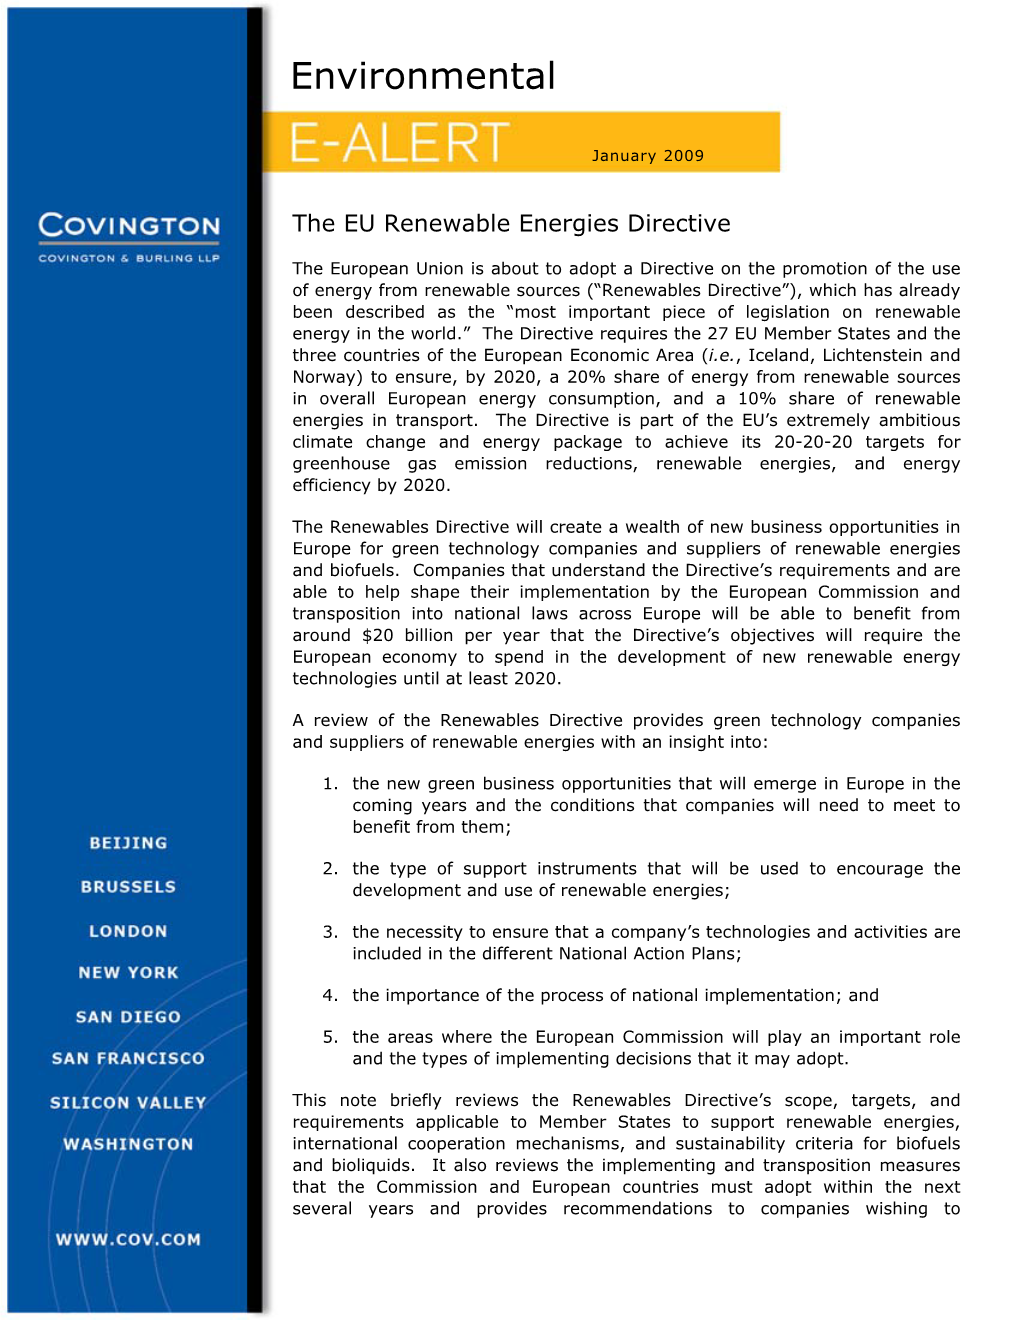 EU Renewable Energies Directive